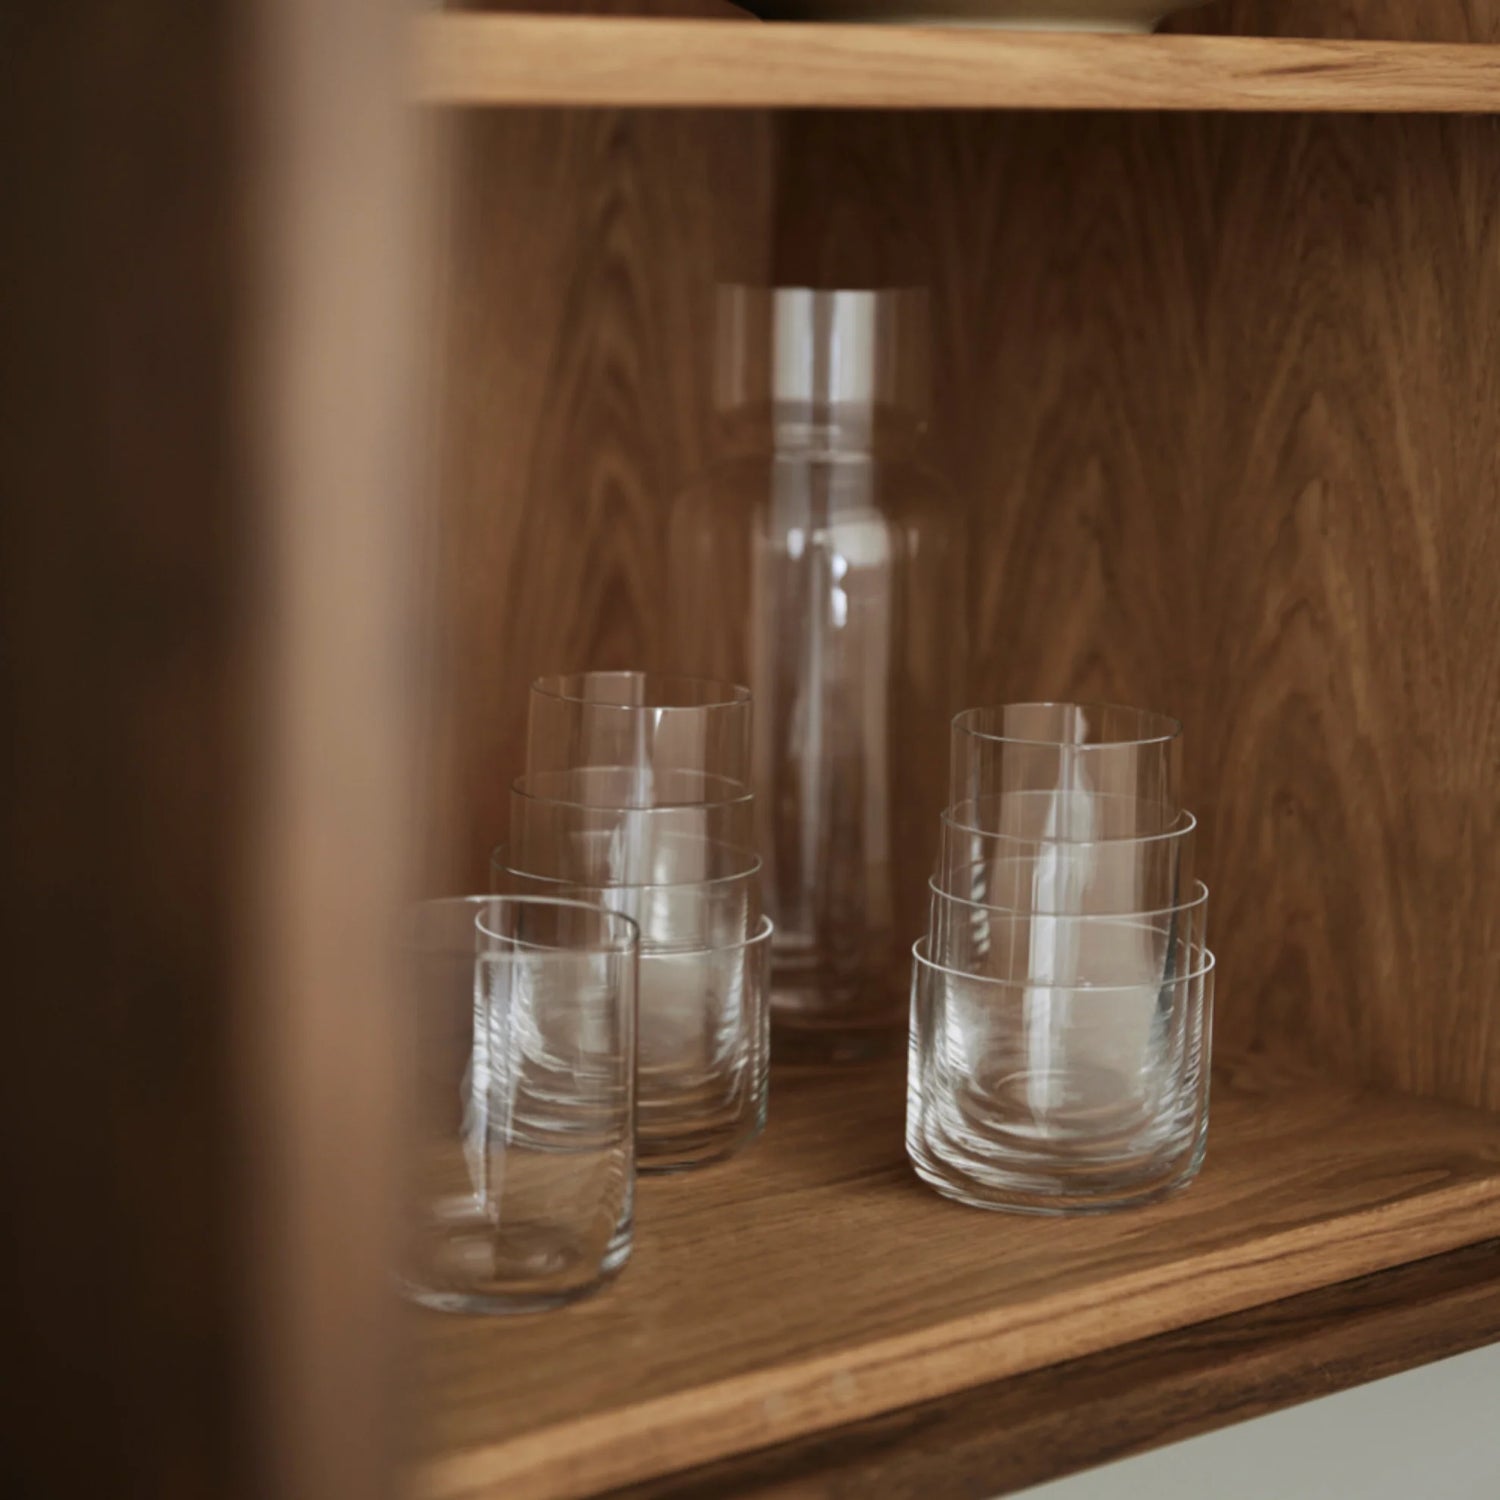 Aarke Glassware Nesting Glasses sit nested on a shelf.